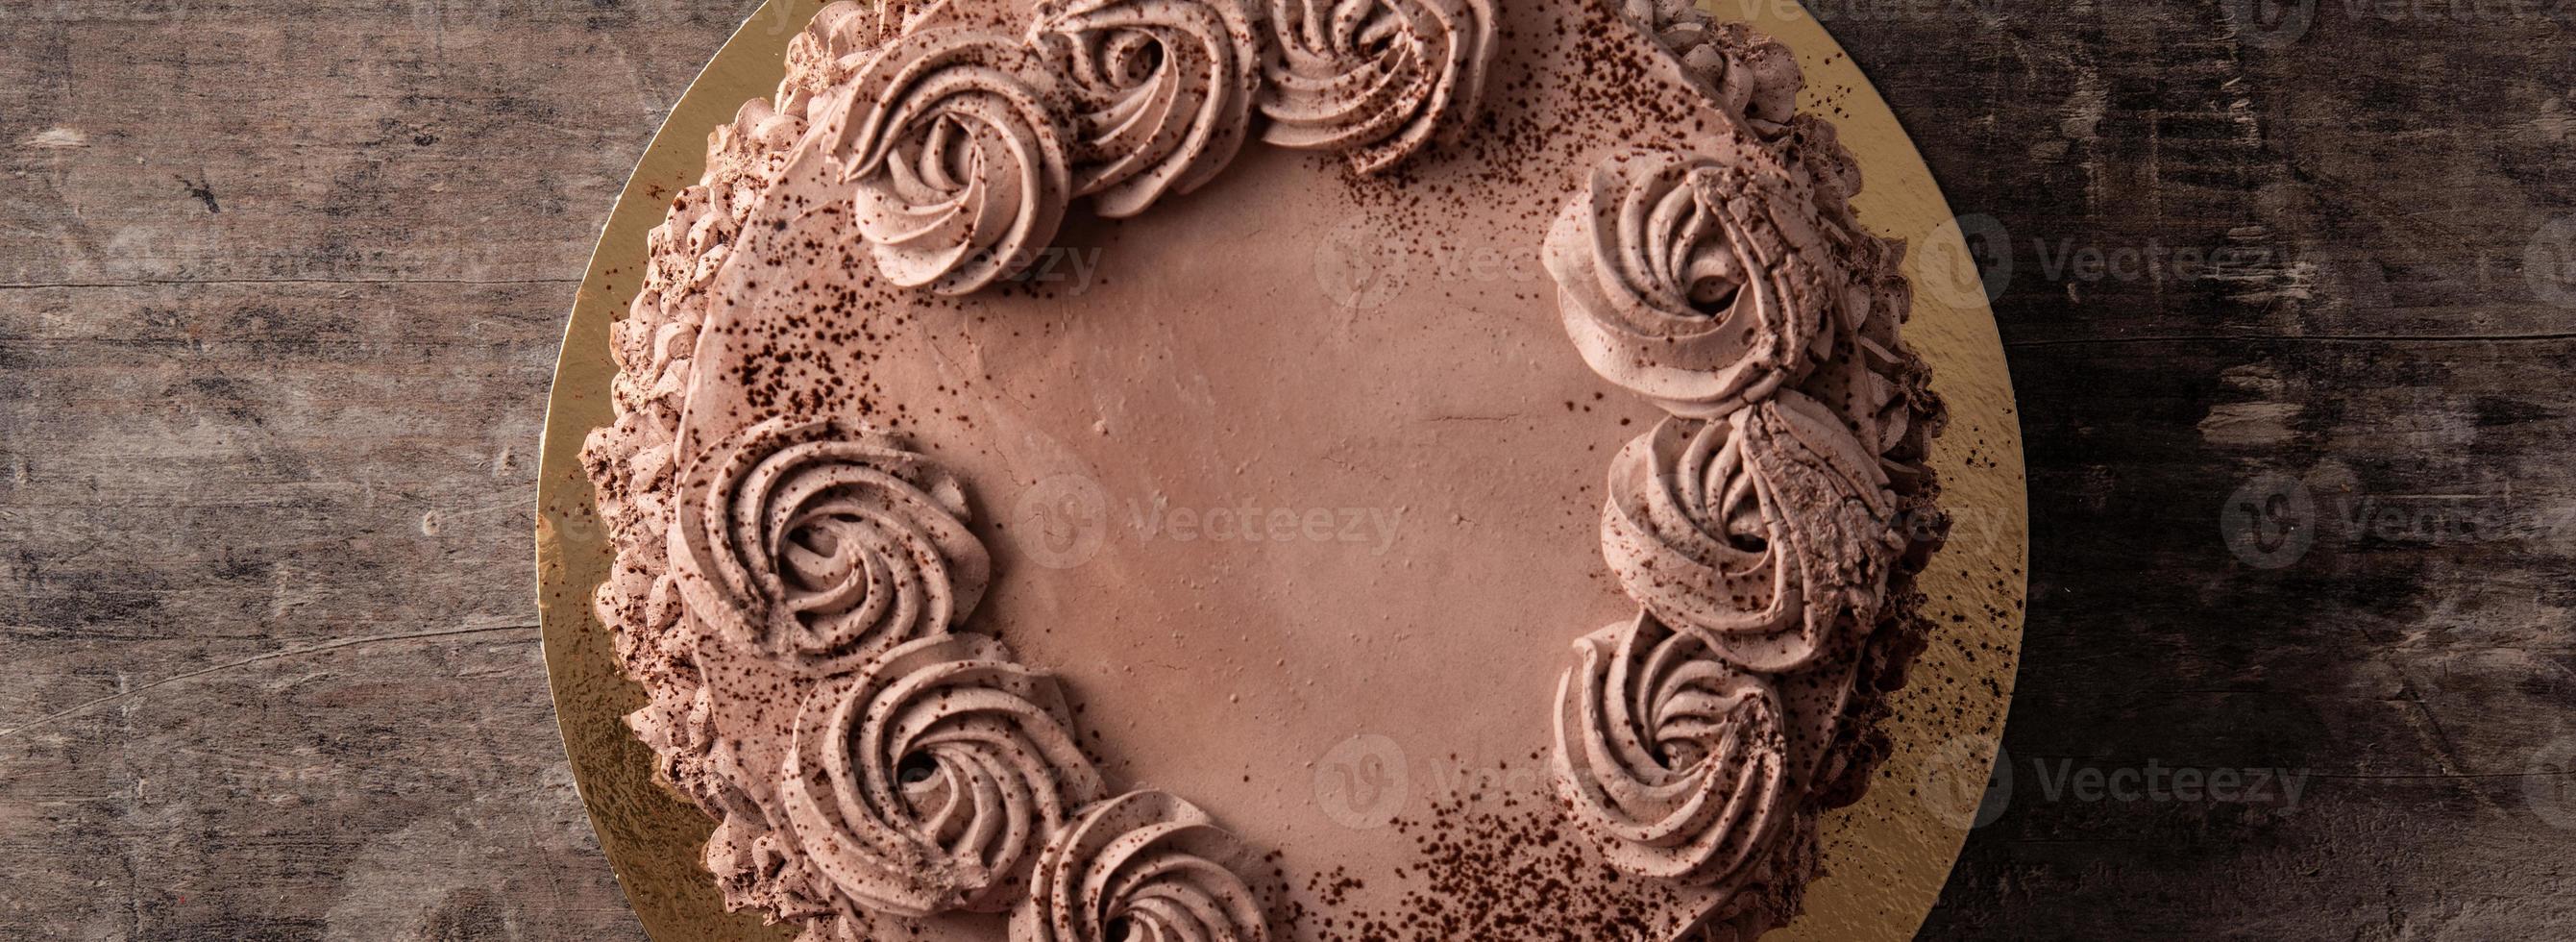 stukje chocolade truffel cake foto